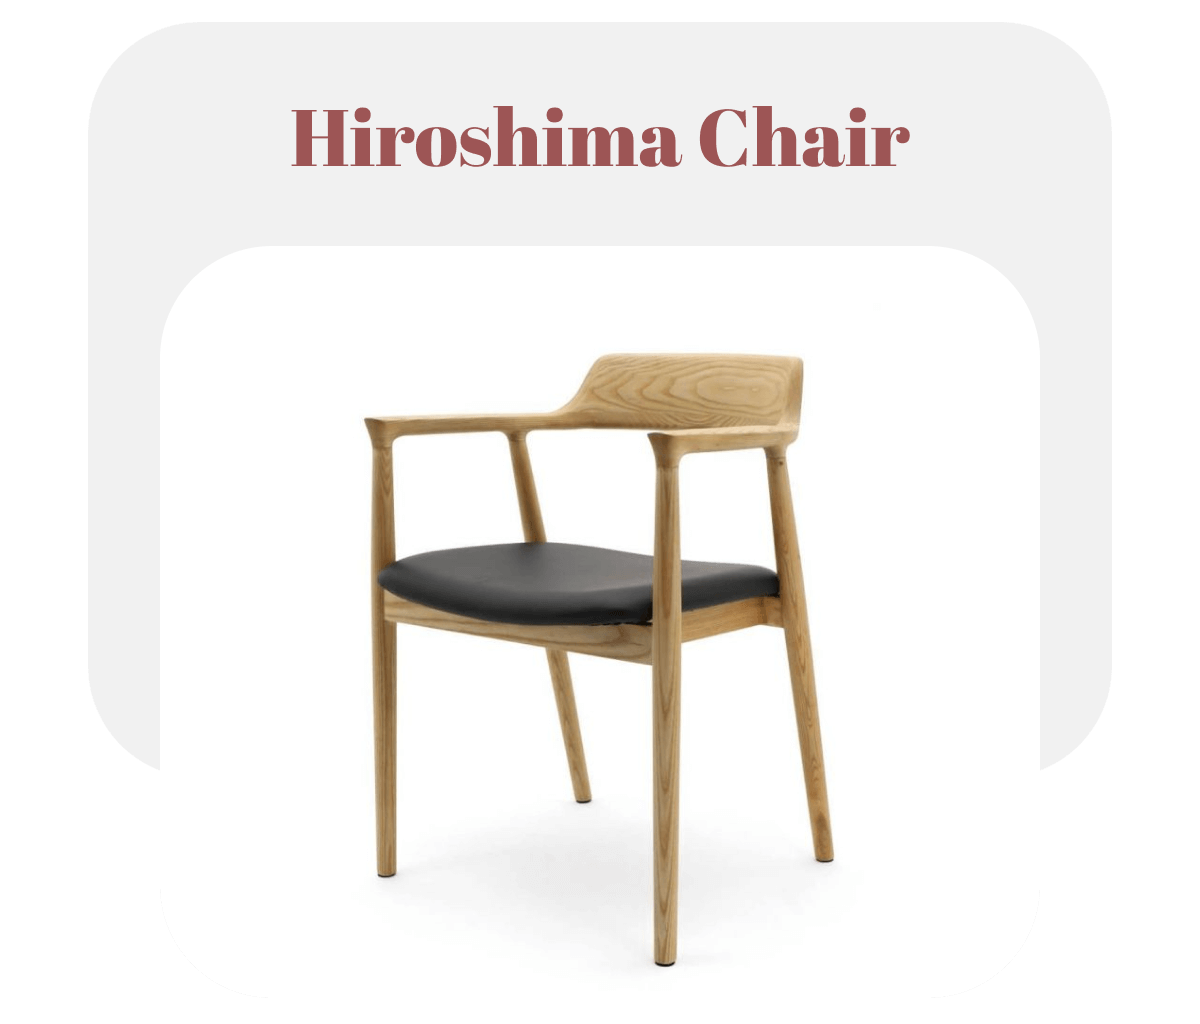 Hiroshima Chair